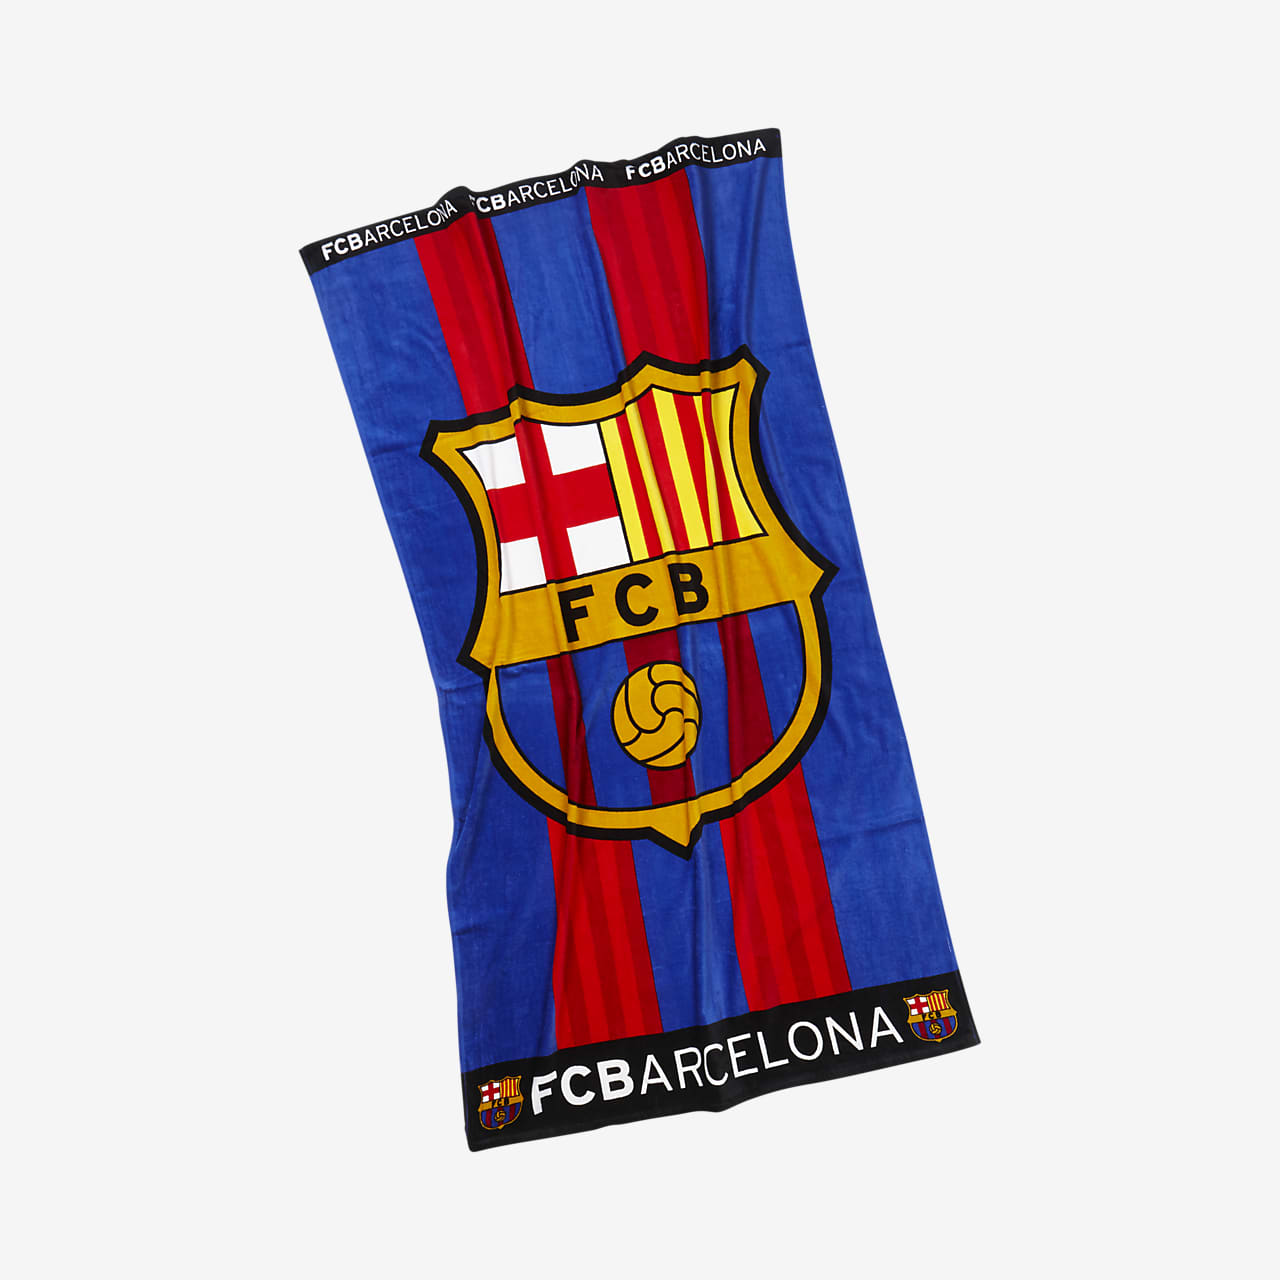 Strandtuch Badetuch Strandlaken FC Barcelona FCBarcelona BARCA Beach Towel 